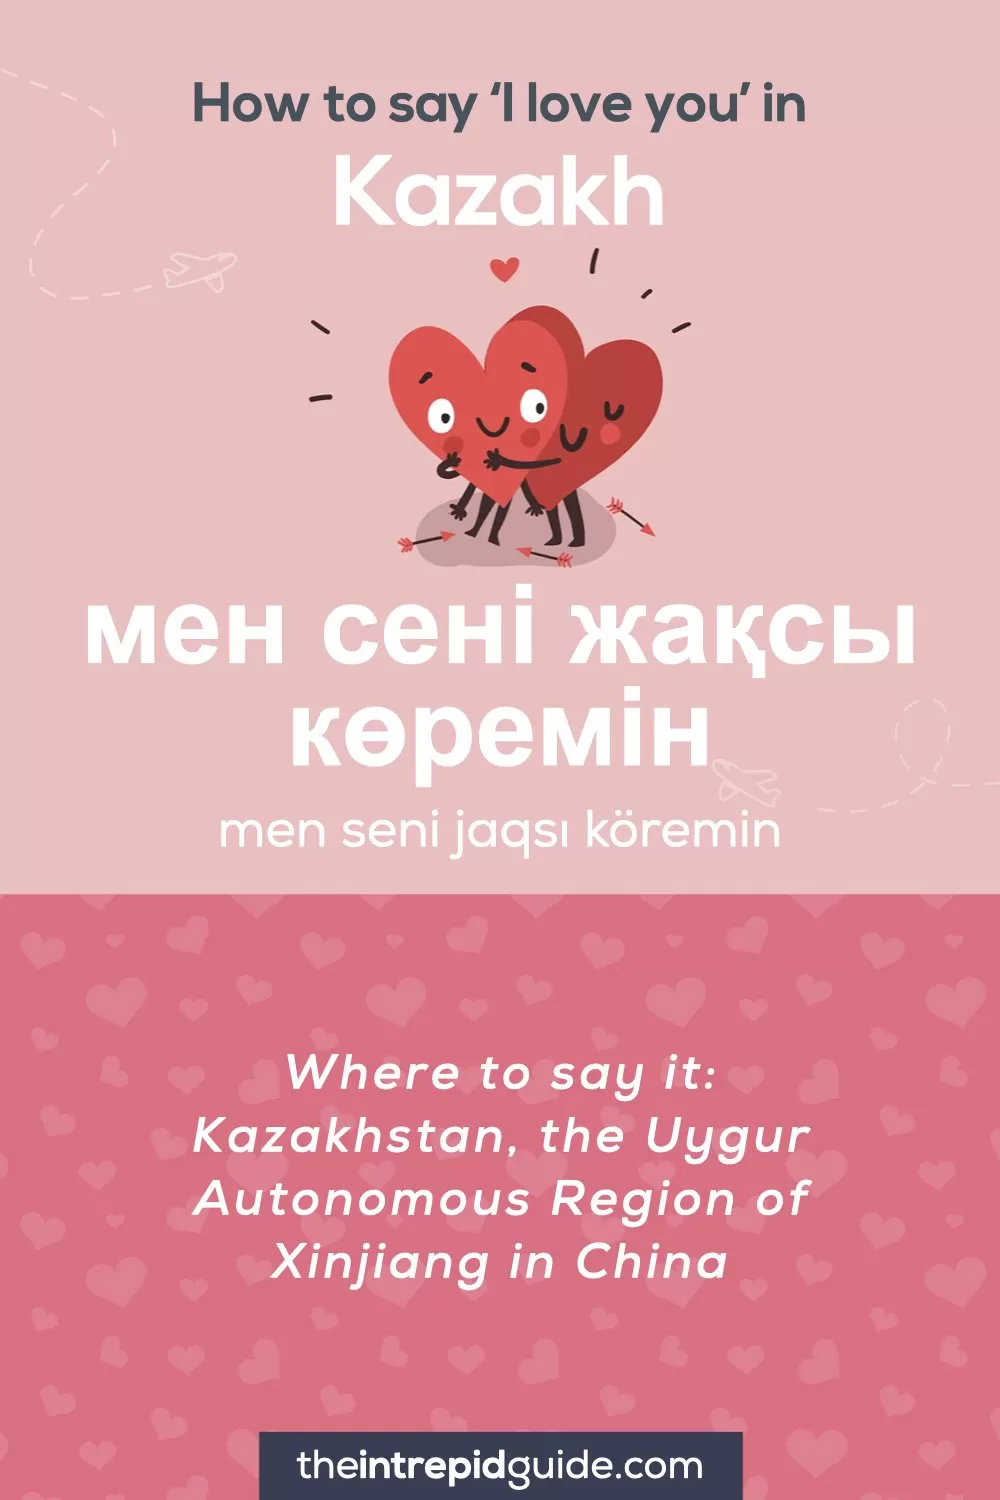 How to say I love you in different languages - Kazakh - мен сені жақсы көремін